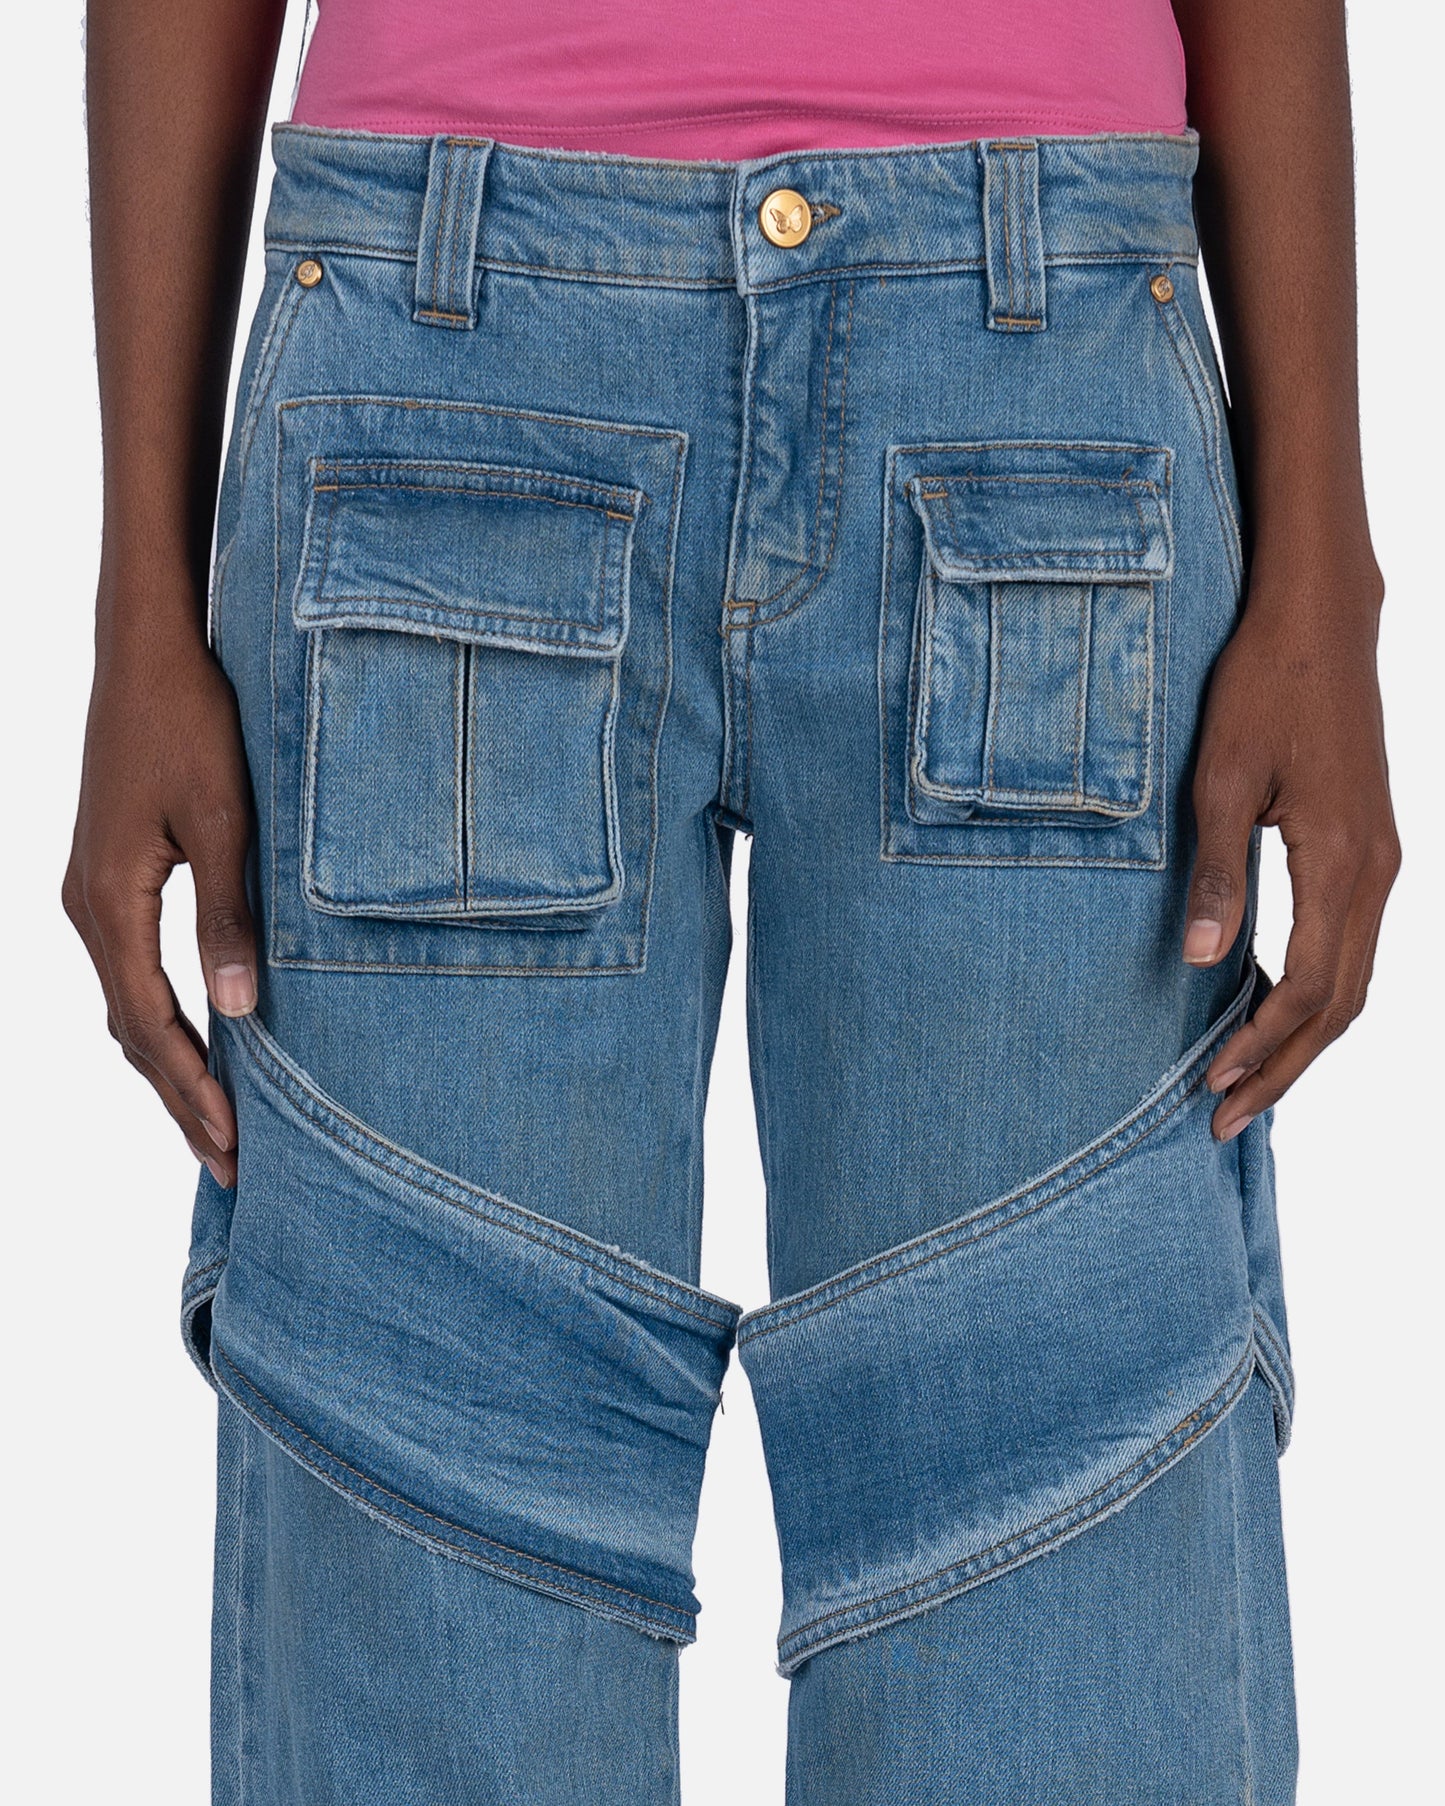 Blumarine Women Pants Cargo Jeans in Blue Stone-Washed Denim